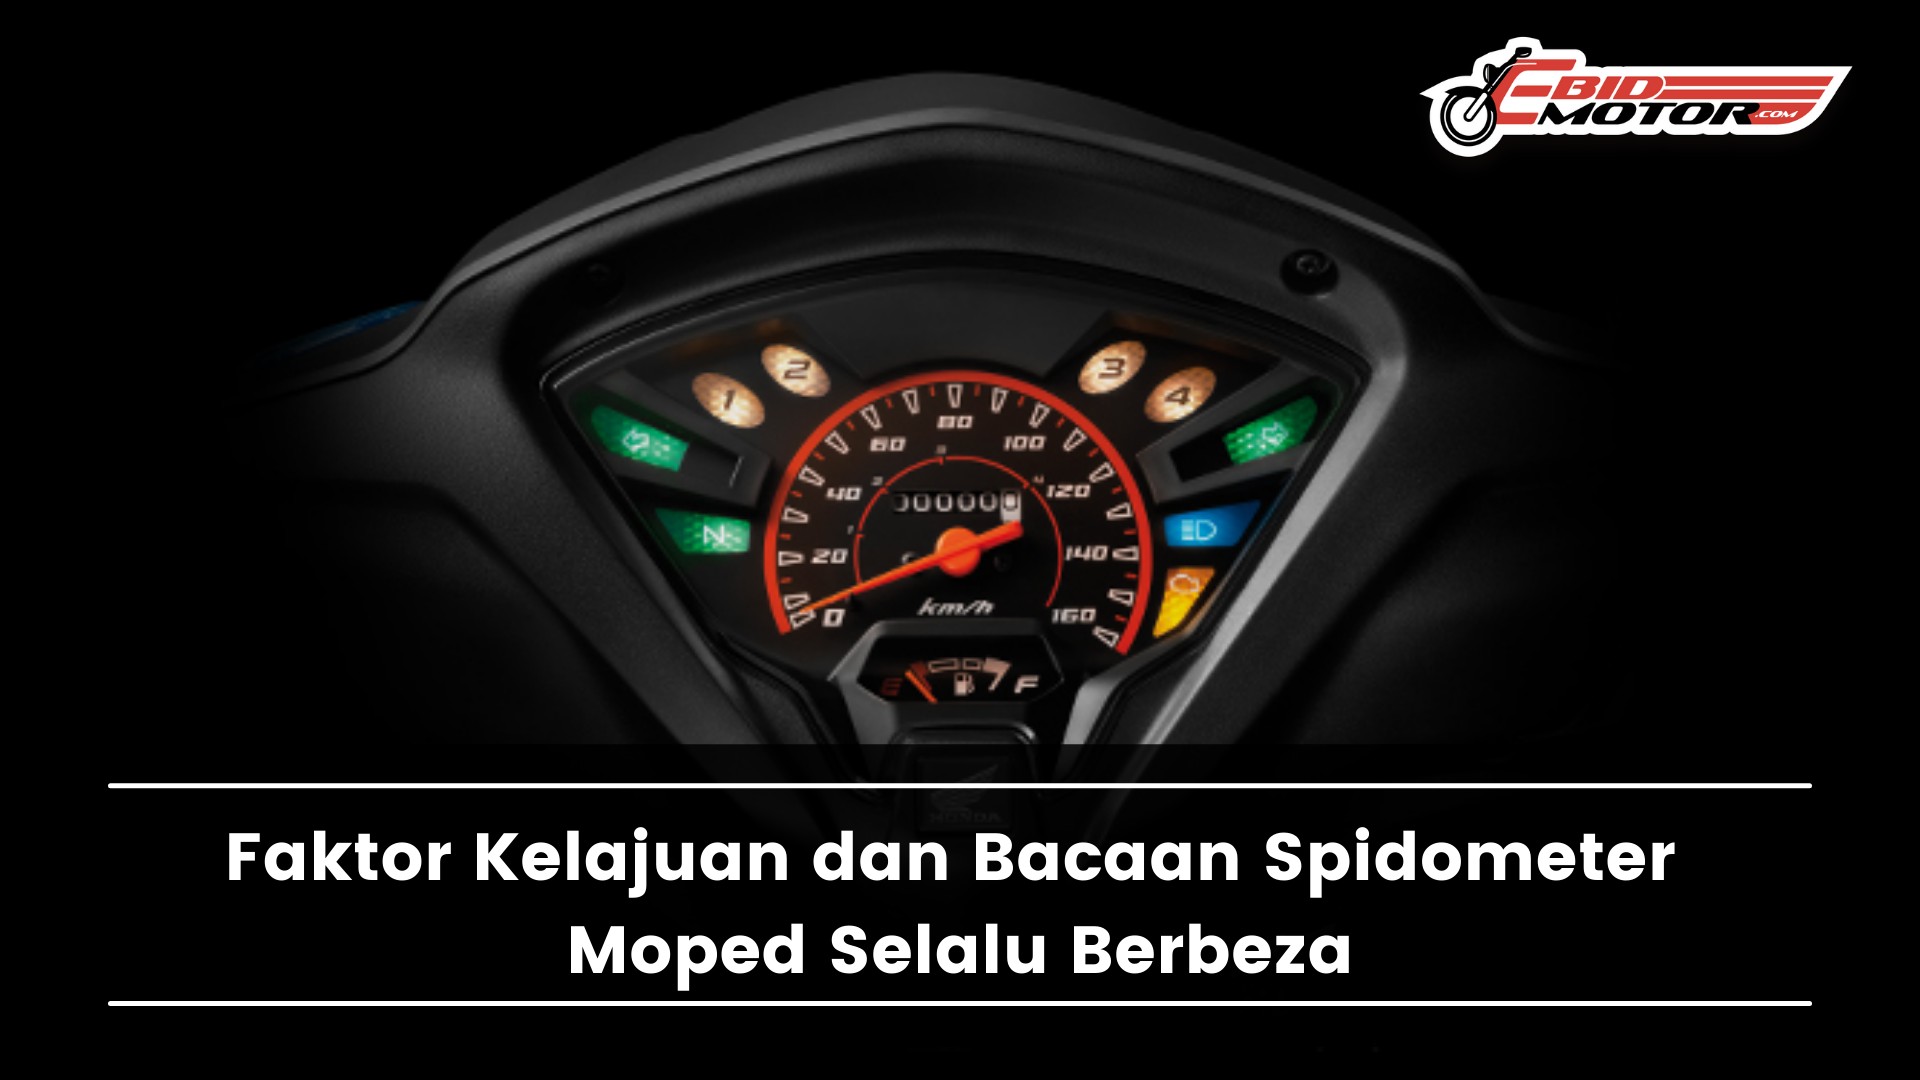 Jika Kelajuan dan Bacaan Spidometer Moped Berbeza Tanda Meter Rosak Ke?